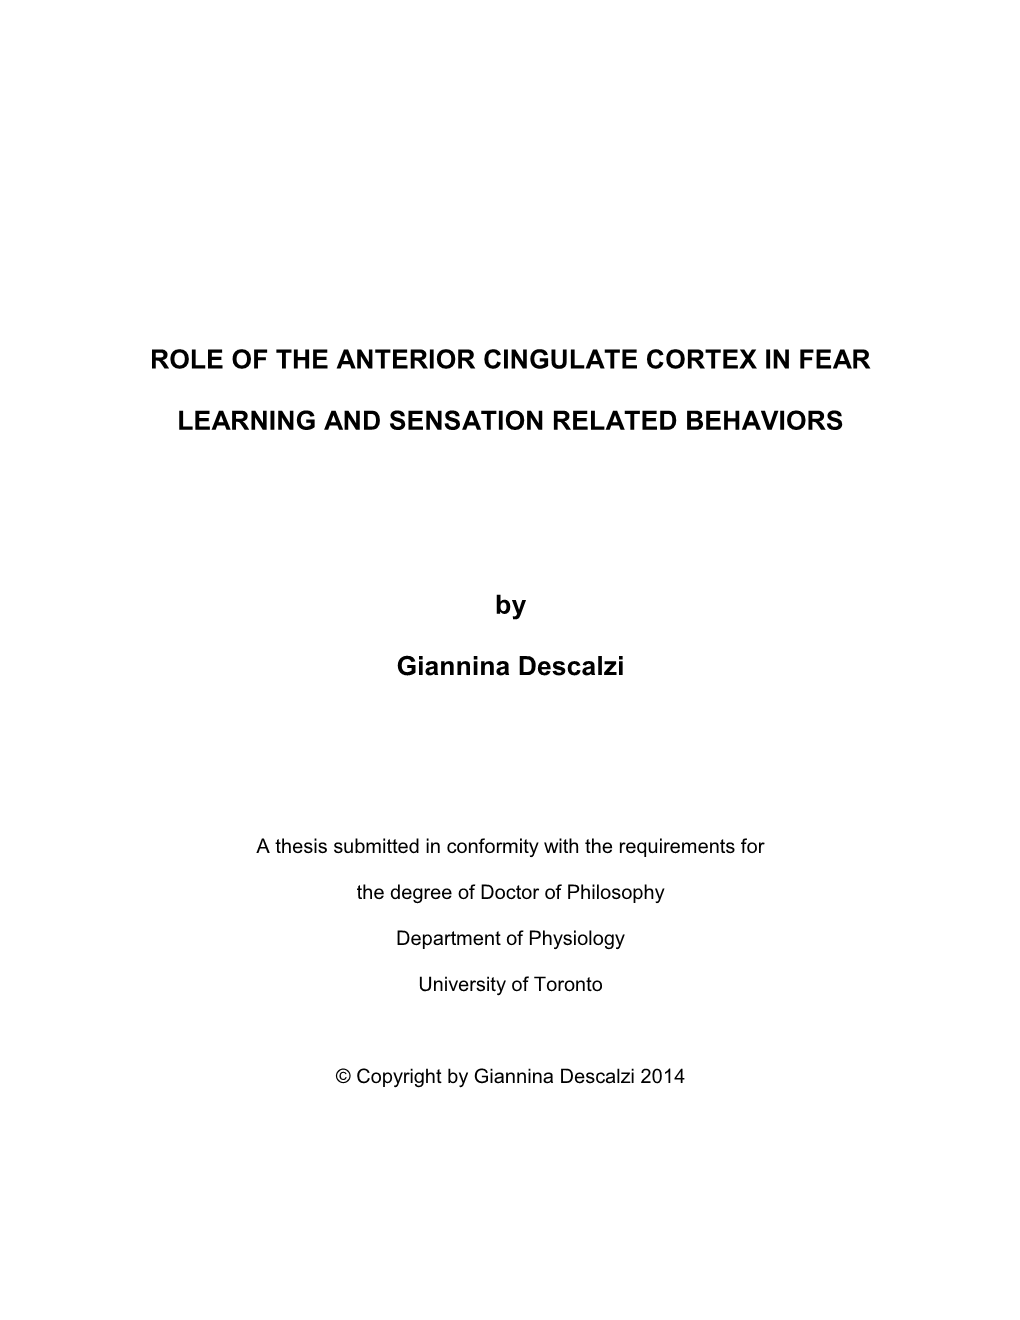 Role of the Anterior Cingulate Cortex in Fear